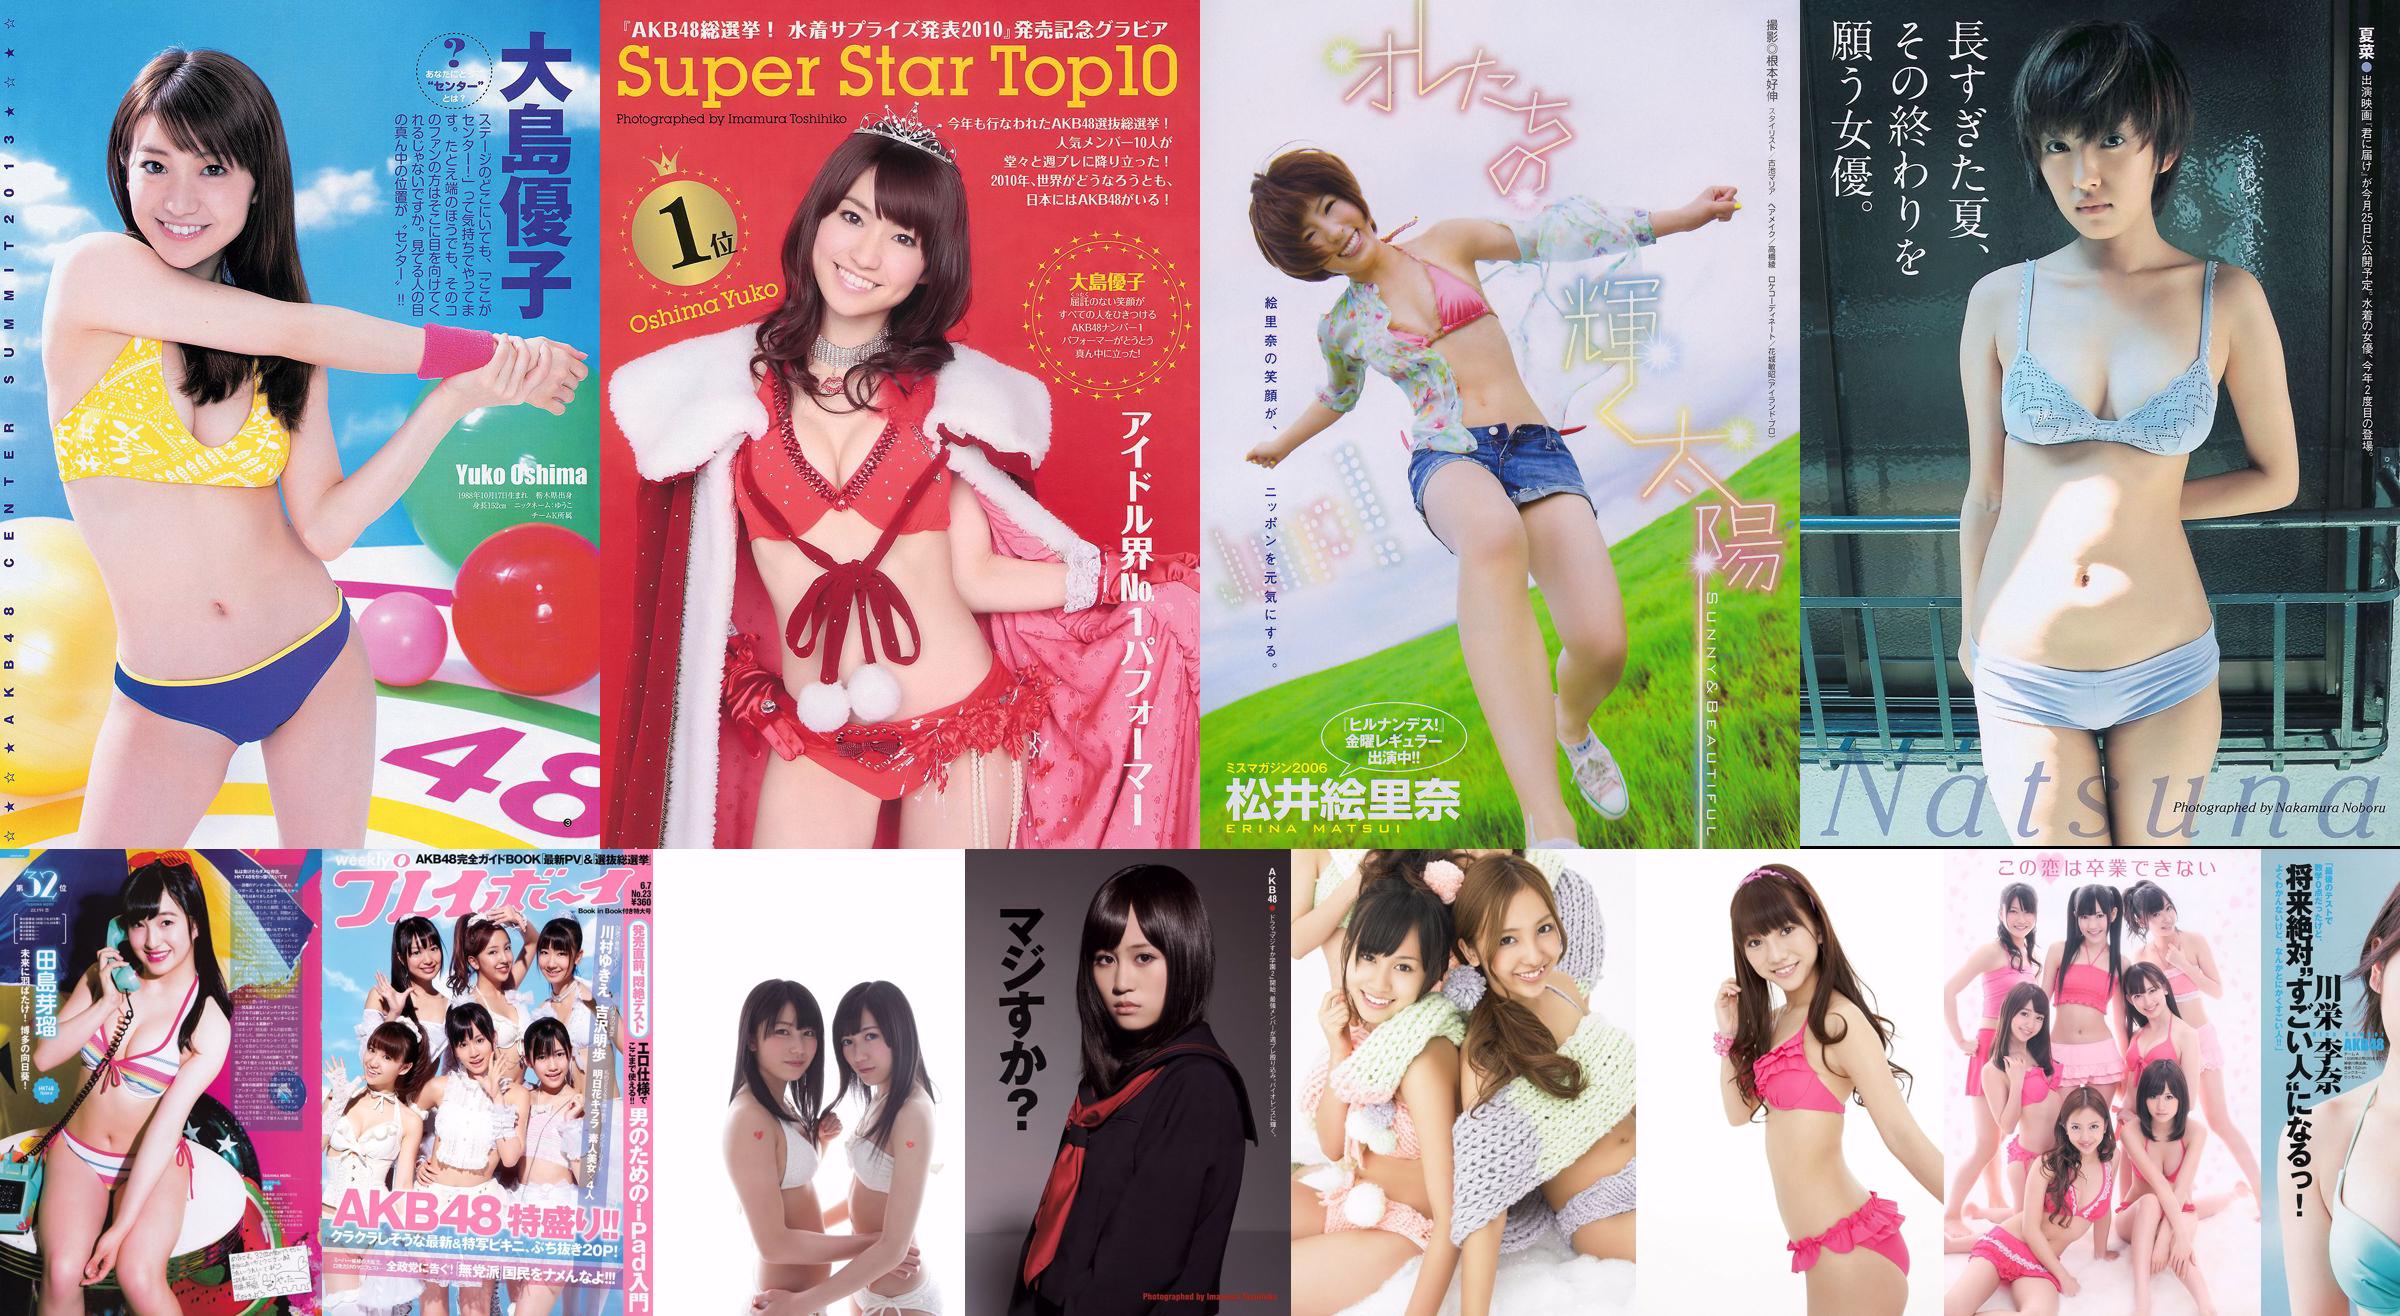 Japan AKB48 meidengroep "2013 Fashion Book Underwear Show" No.9352cf Pagina 1